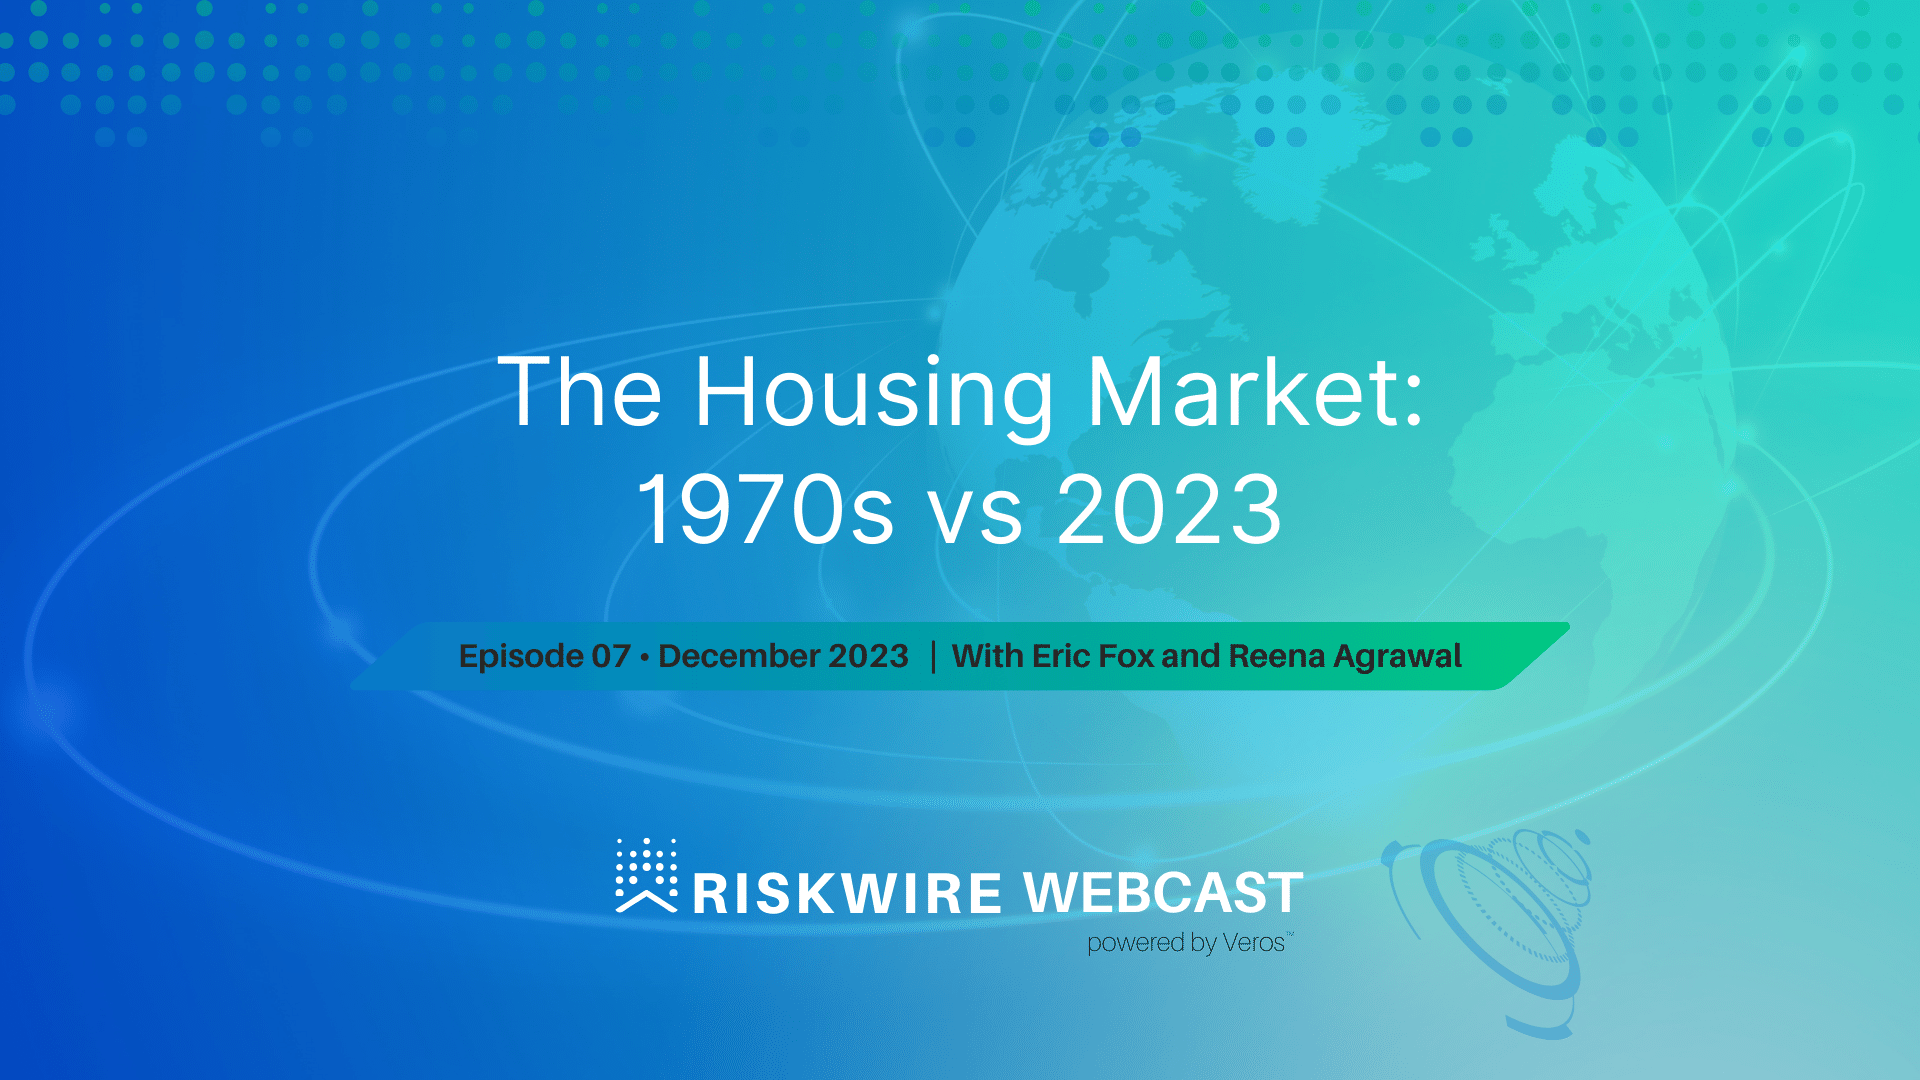 The Housing Market: 1970s vs 2023